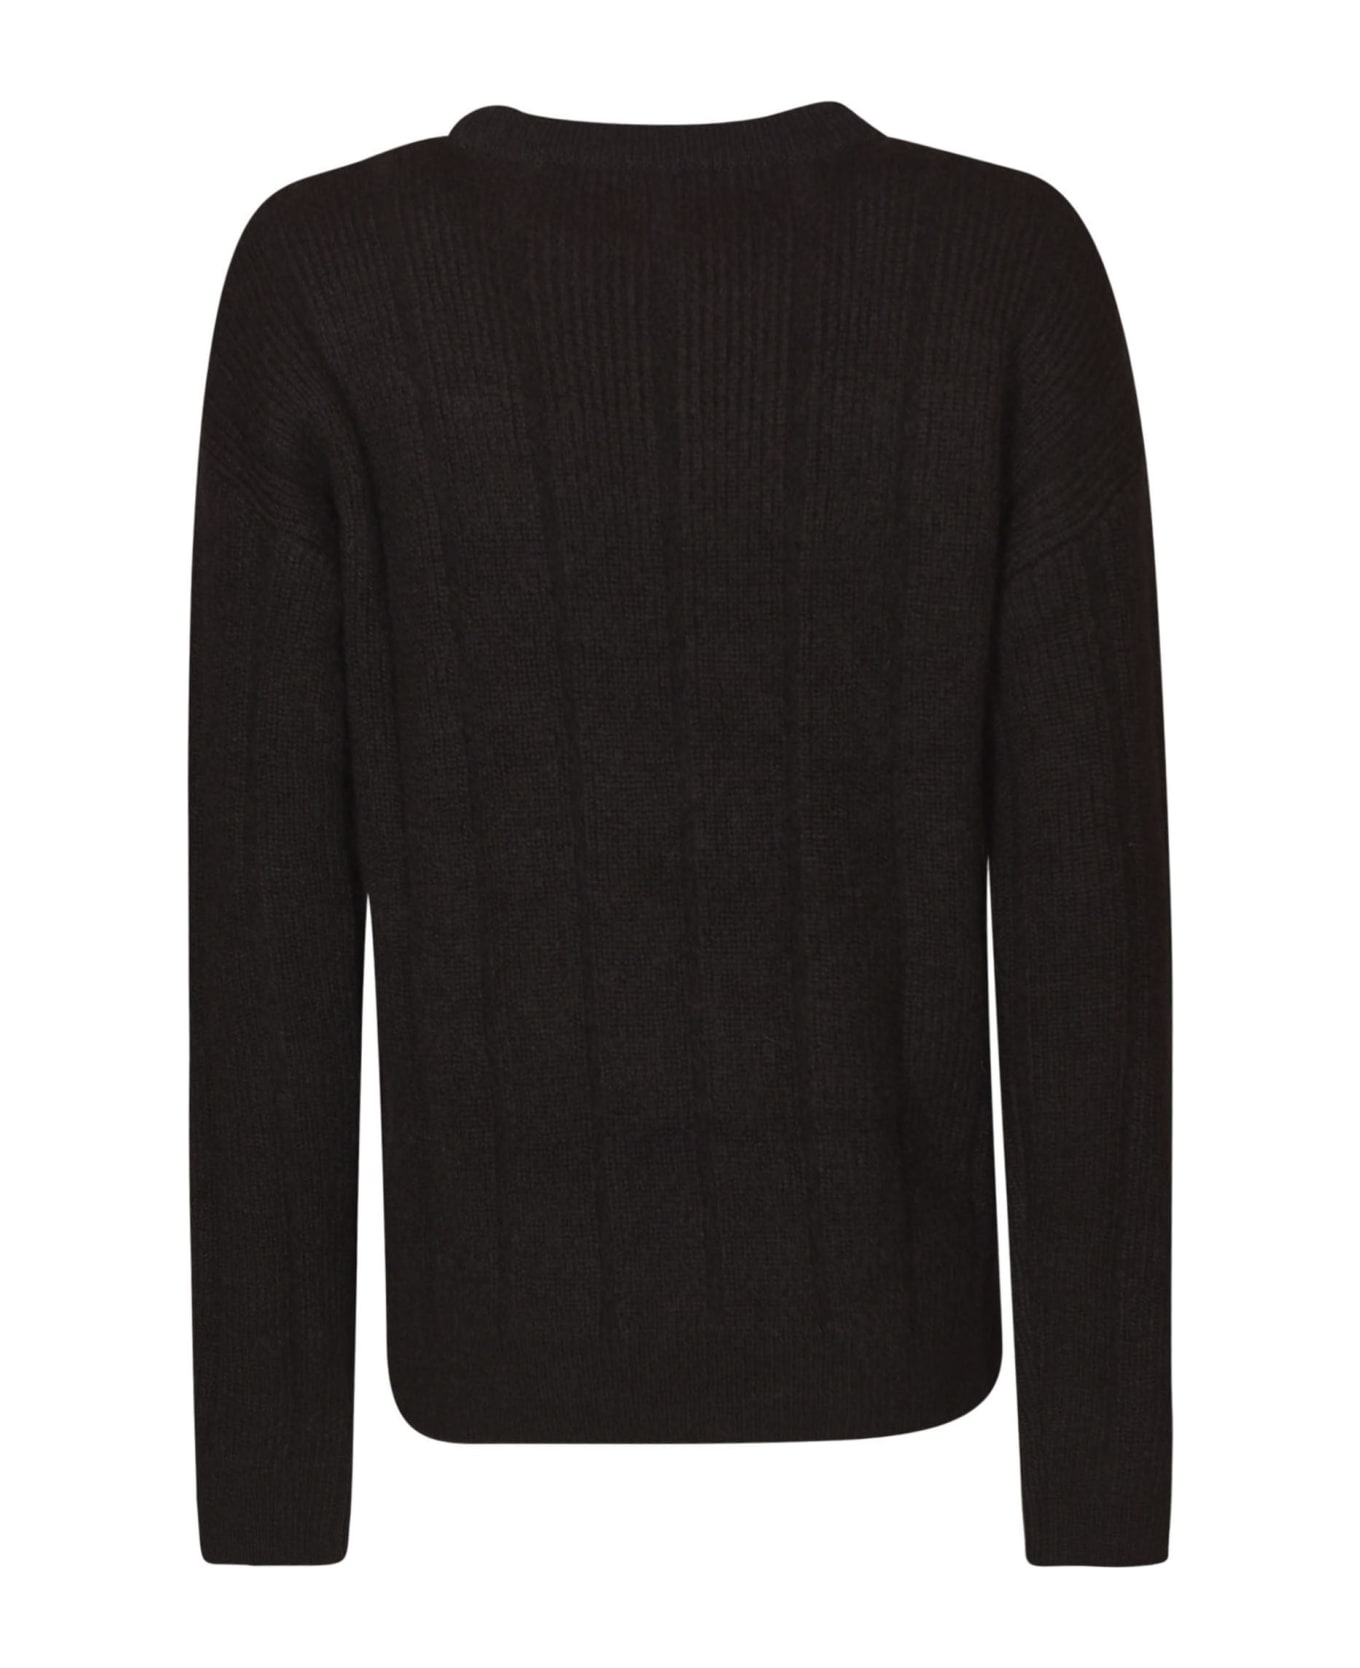 Saint Laurent Round Neck Sweater - Black/White